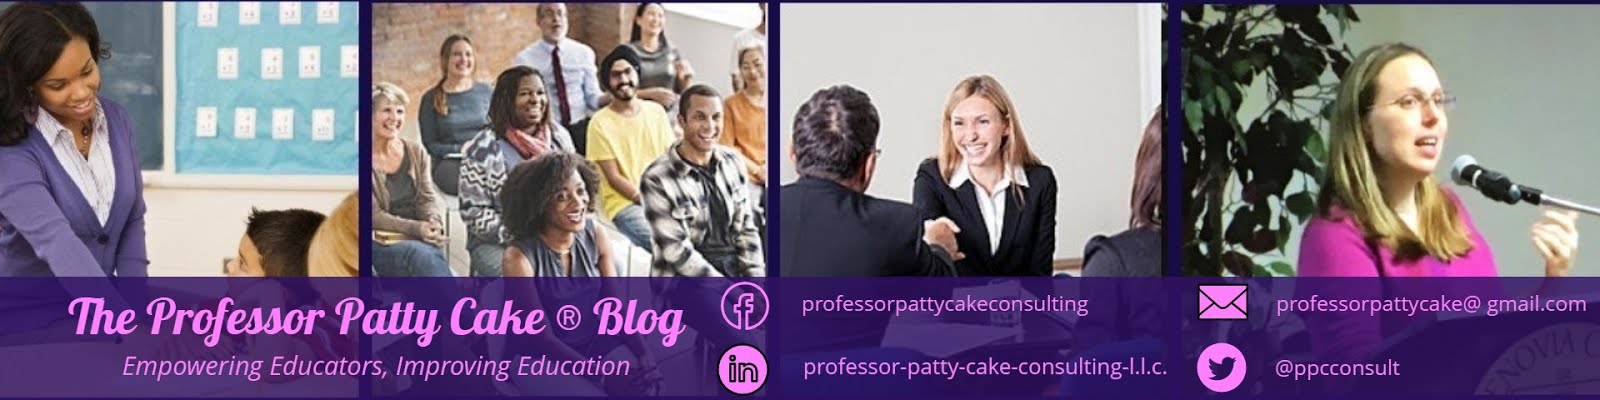 The Professor Patty Cake ® Blog